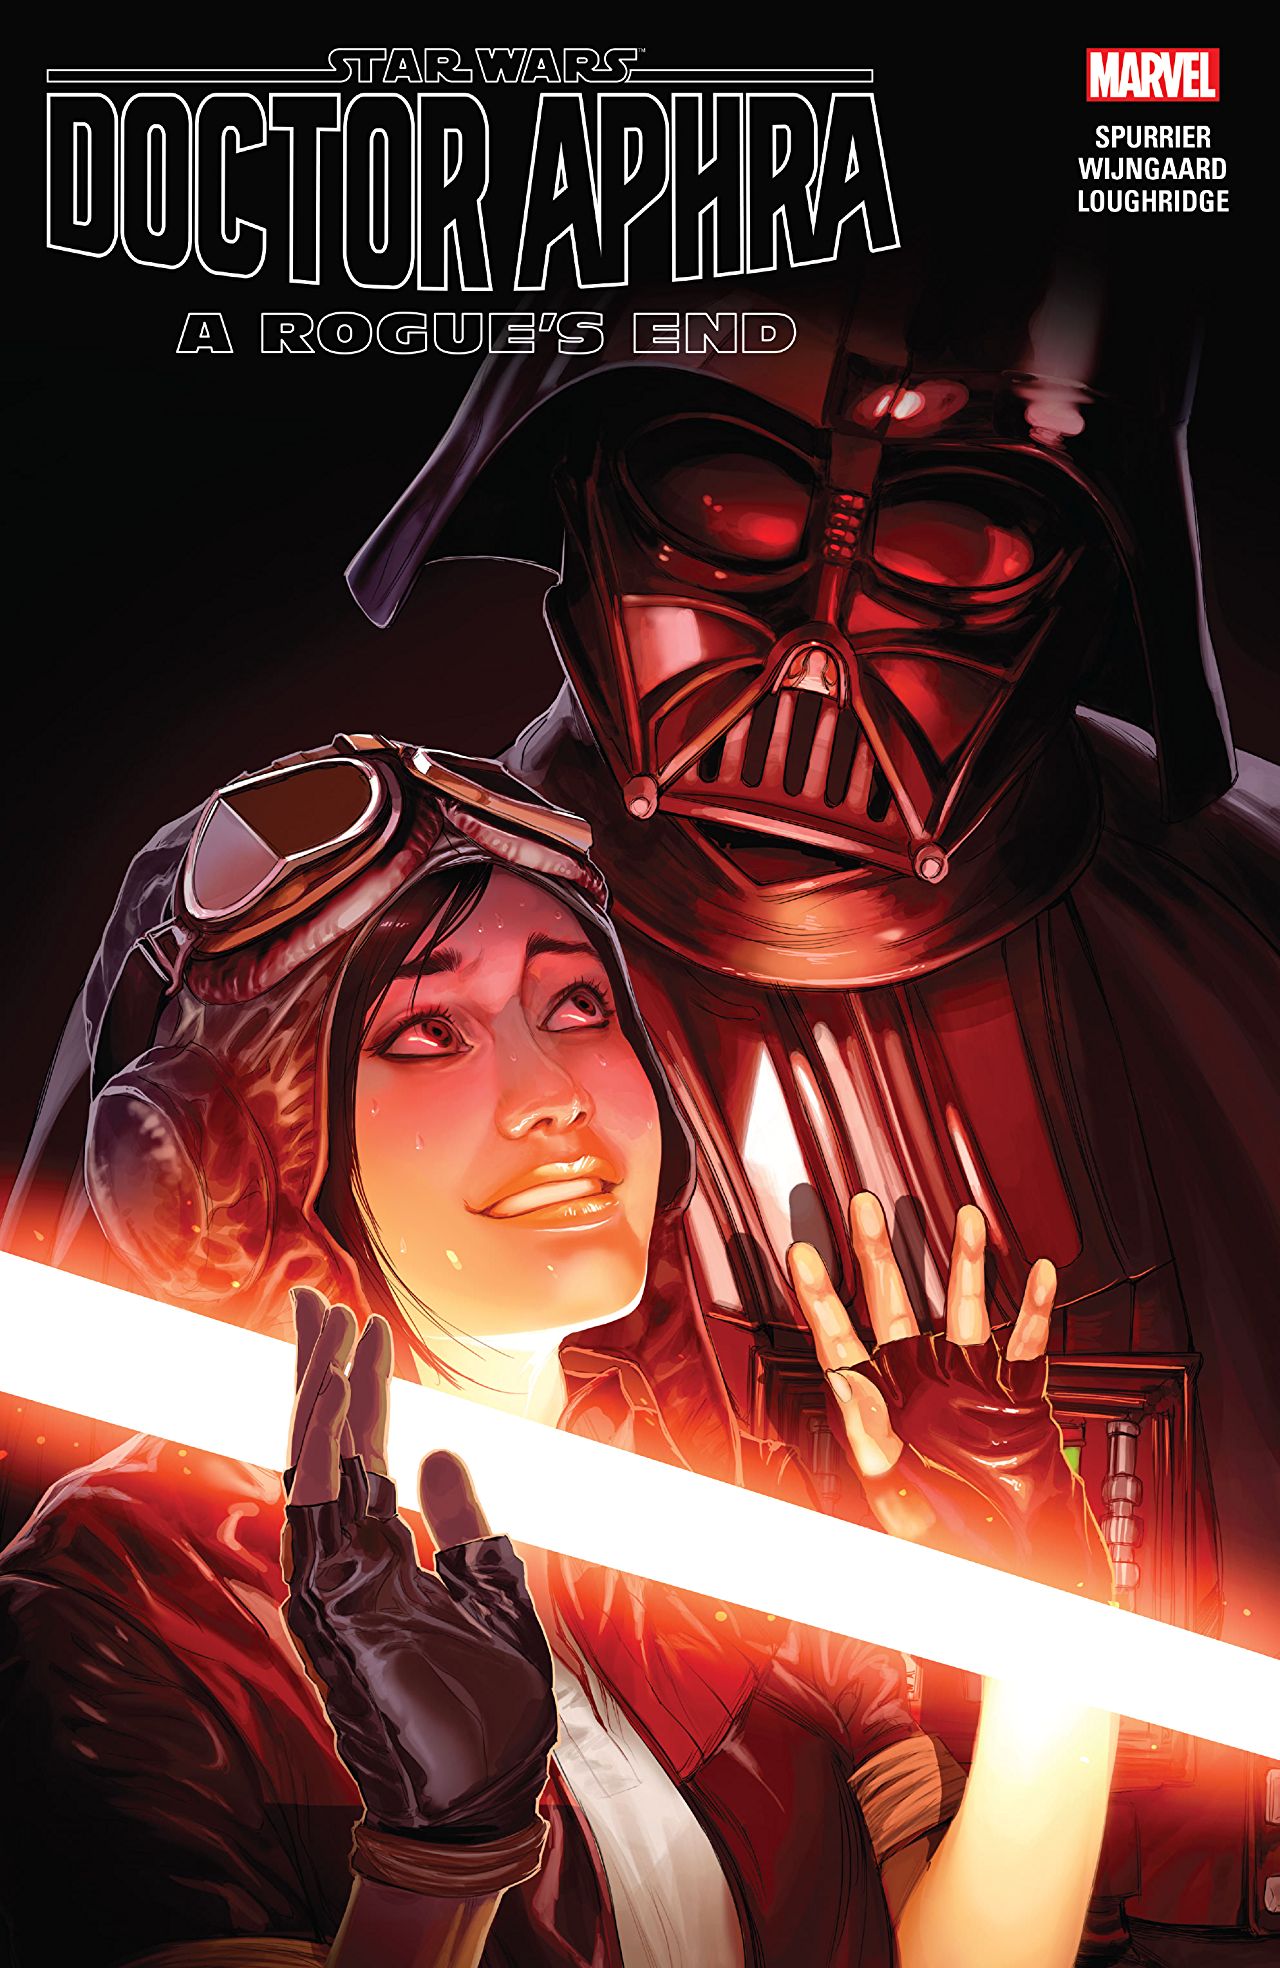 Star Wars: Doctor Aphra Graphic Novel Volume 7 Rogues End